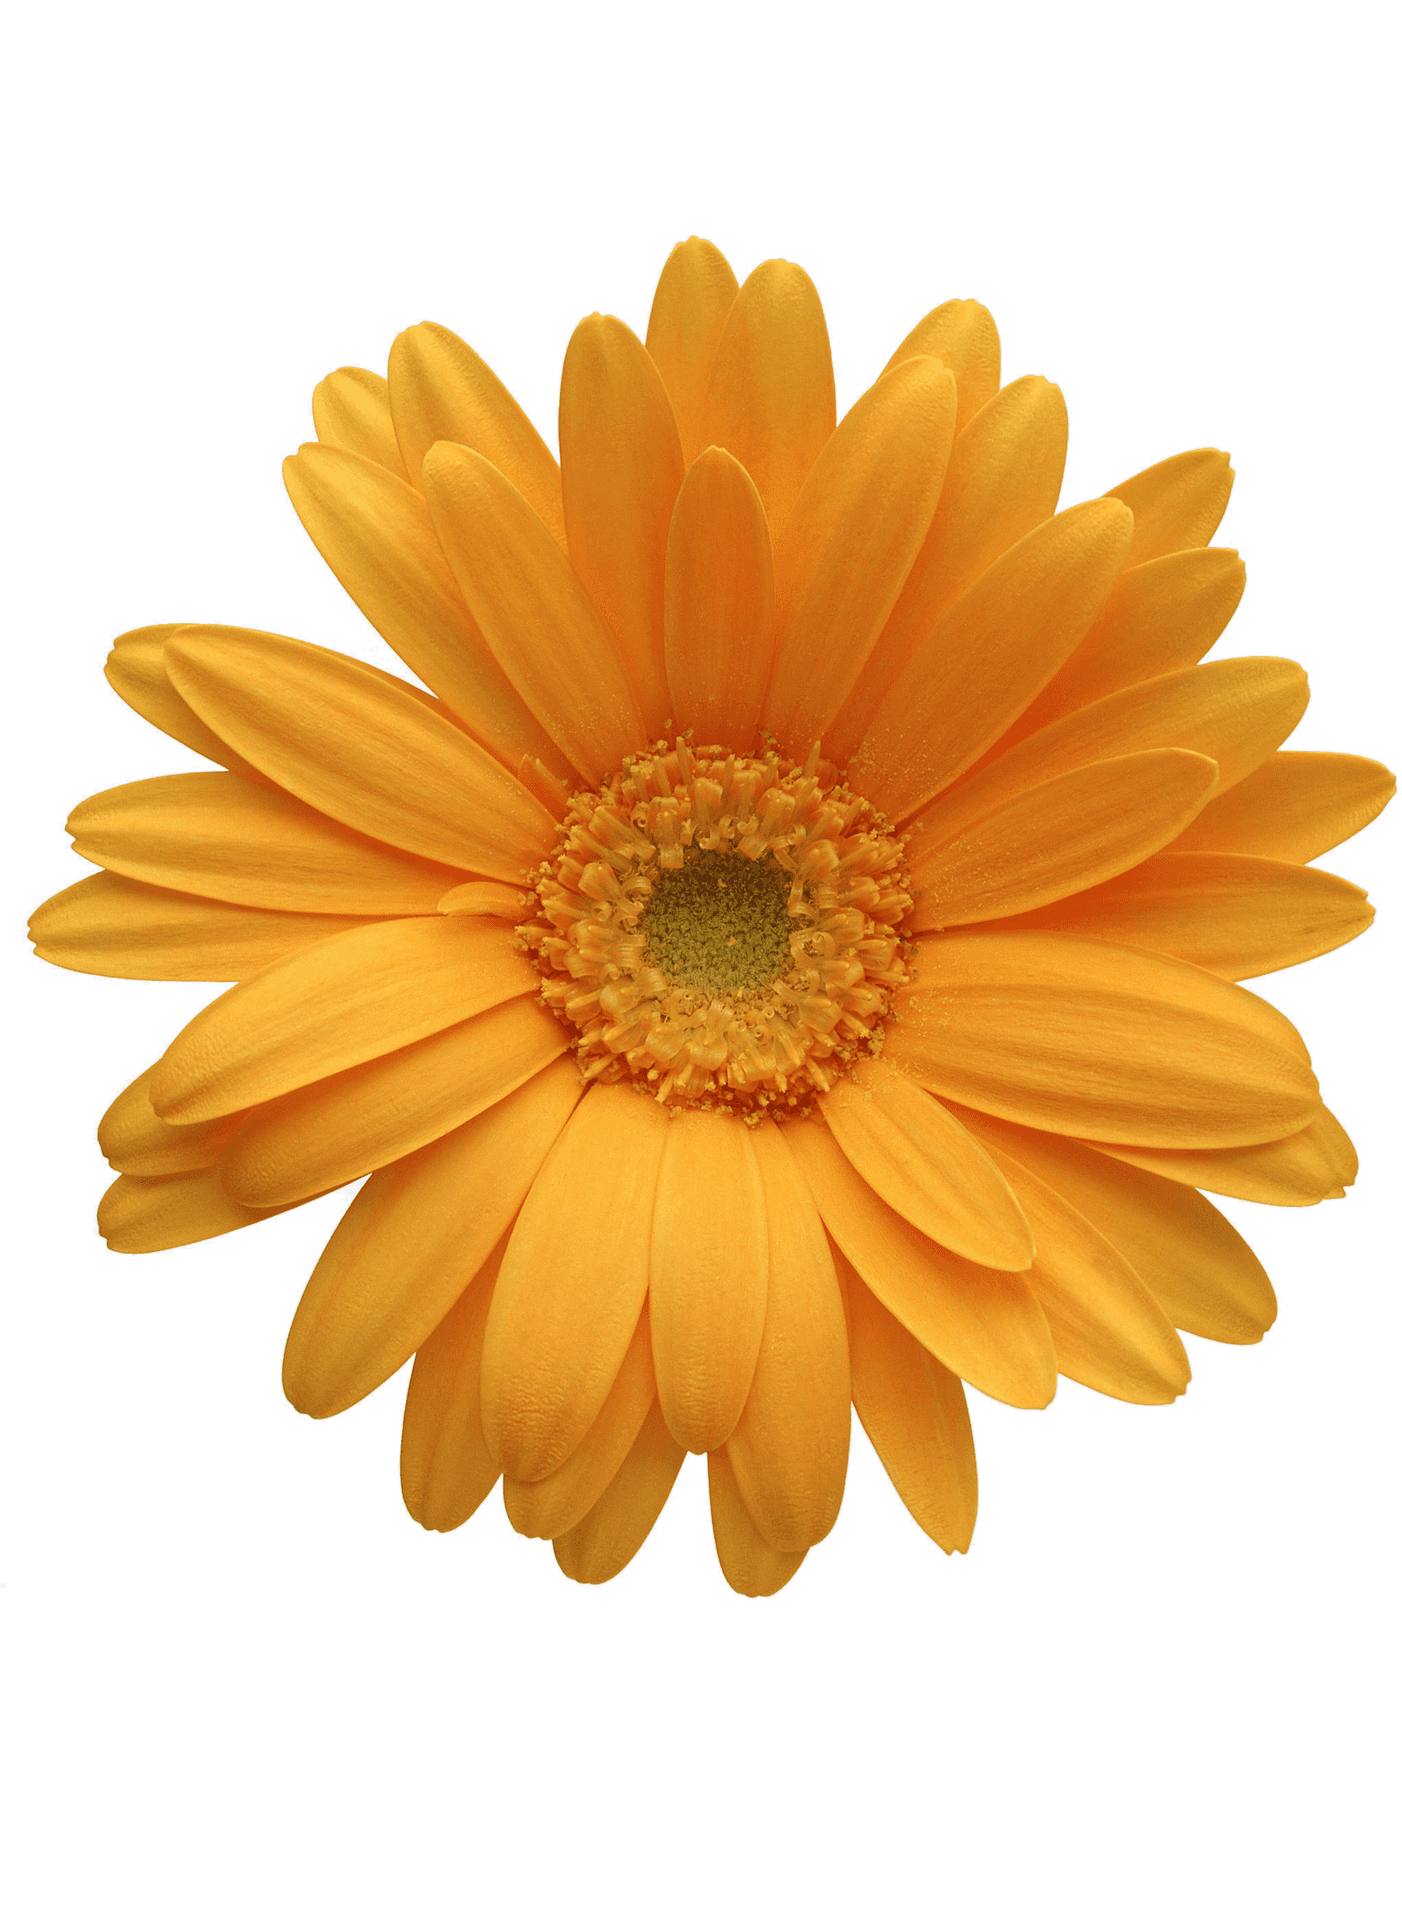 Vibrant Orange Chrysanthemum Flower PNG image